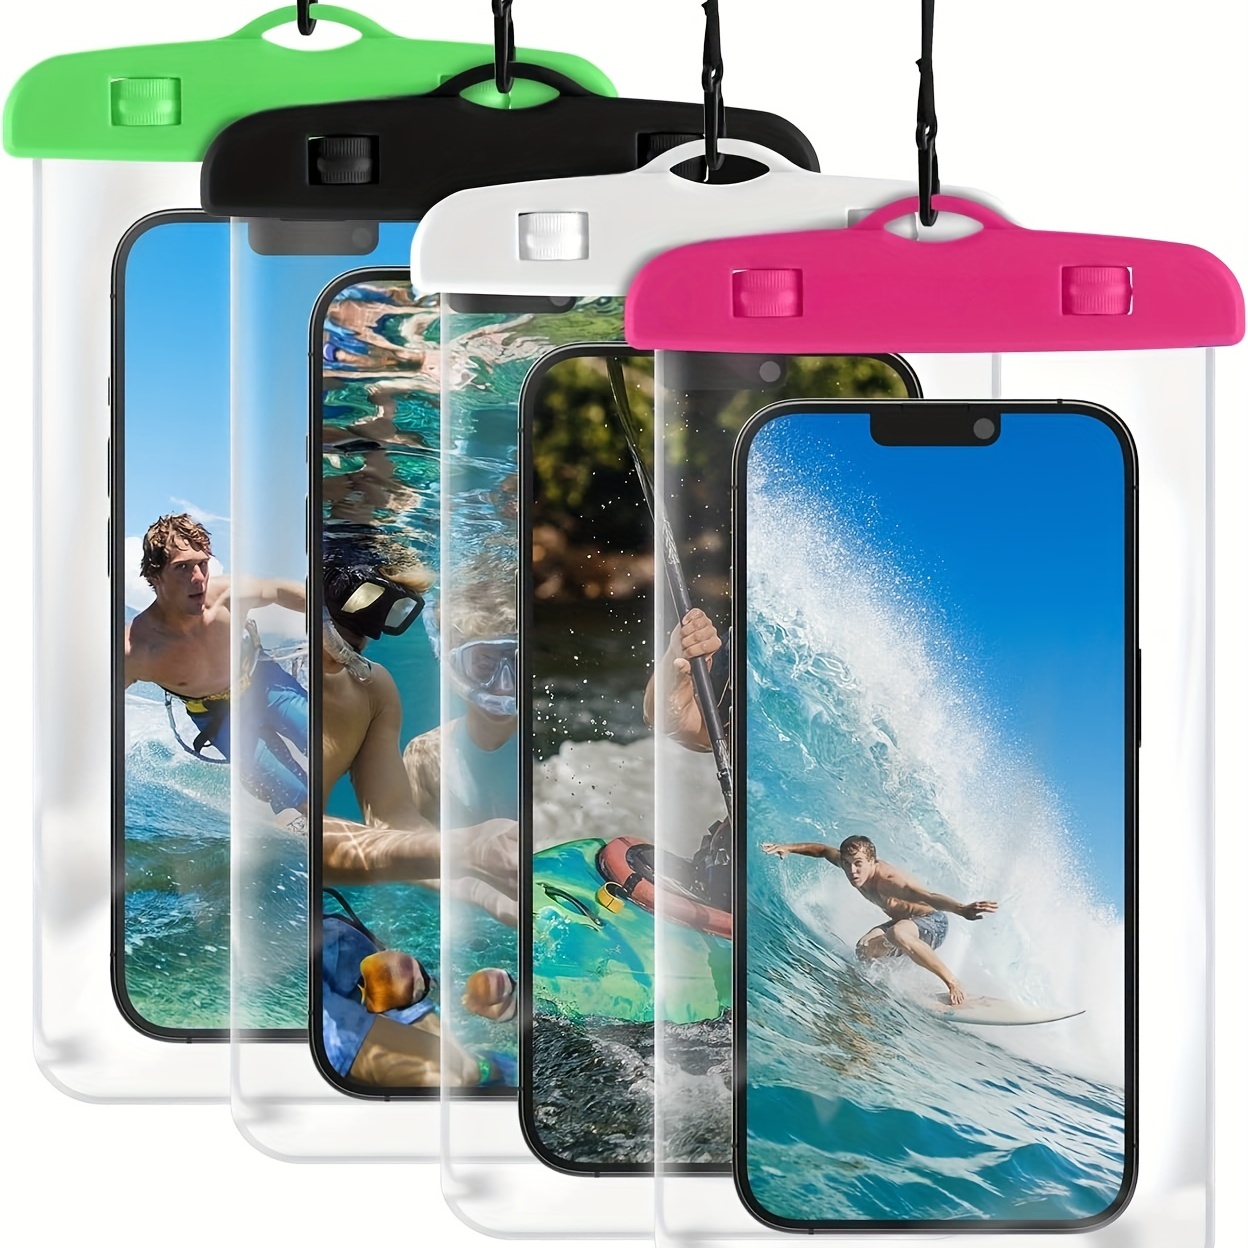 Paquete de 2 fundas impermeables para teléfono flotantes, color rosa y  morado, funda impermeable para teléfono celular, resistente al agua, bolsa  para